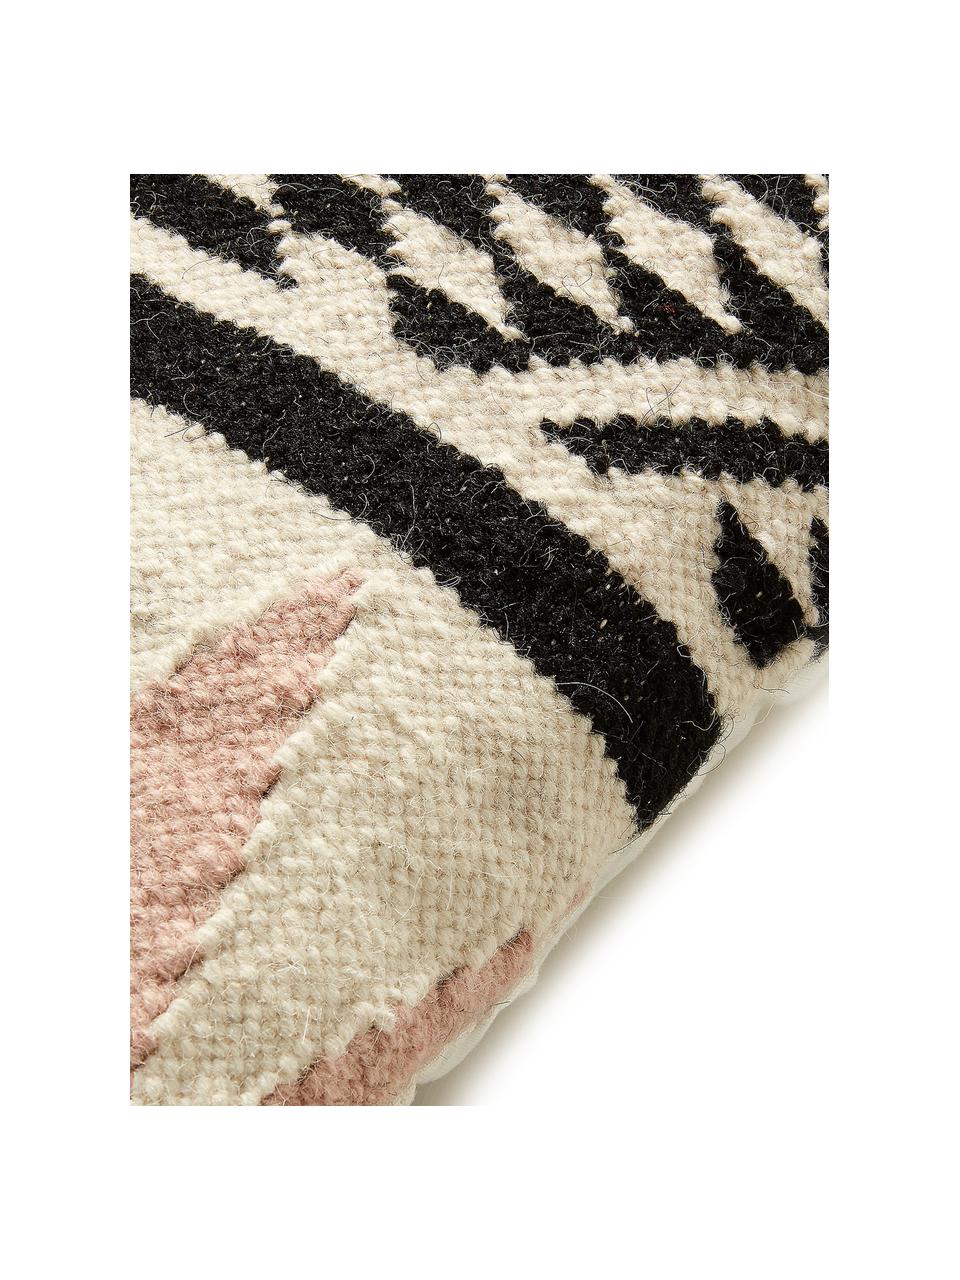 Ethno kussenhoes Greta van wol, 90% wol, 10% katoen, Beige, zwart, roze, 45 x 45 cm